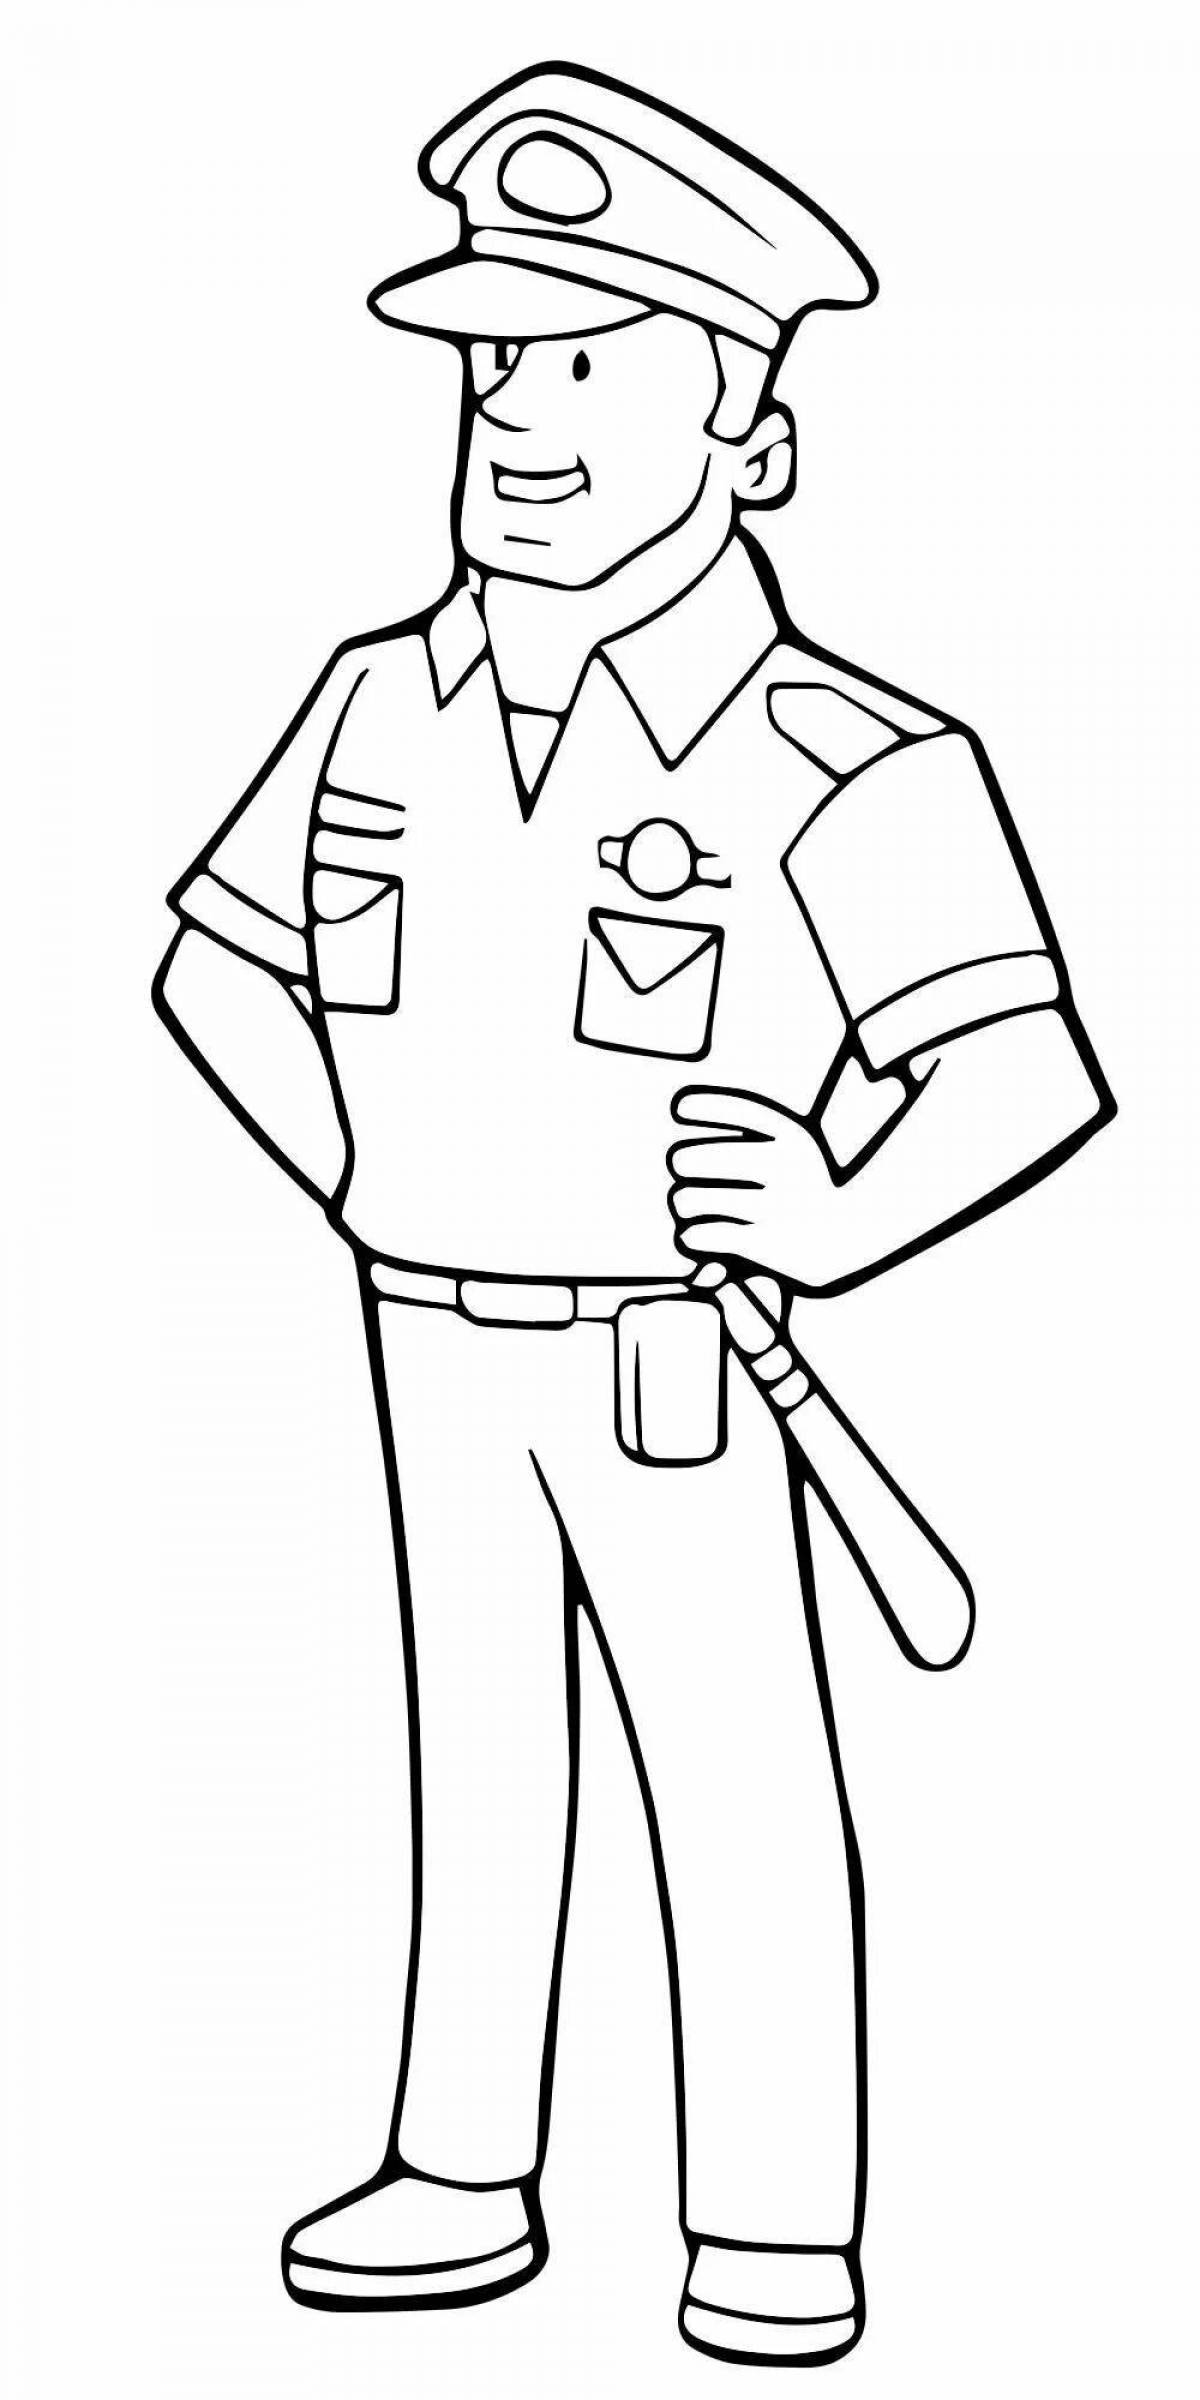 Fun coloring security guard